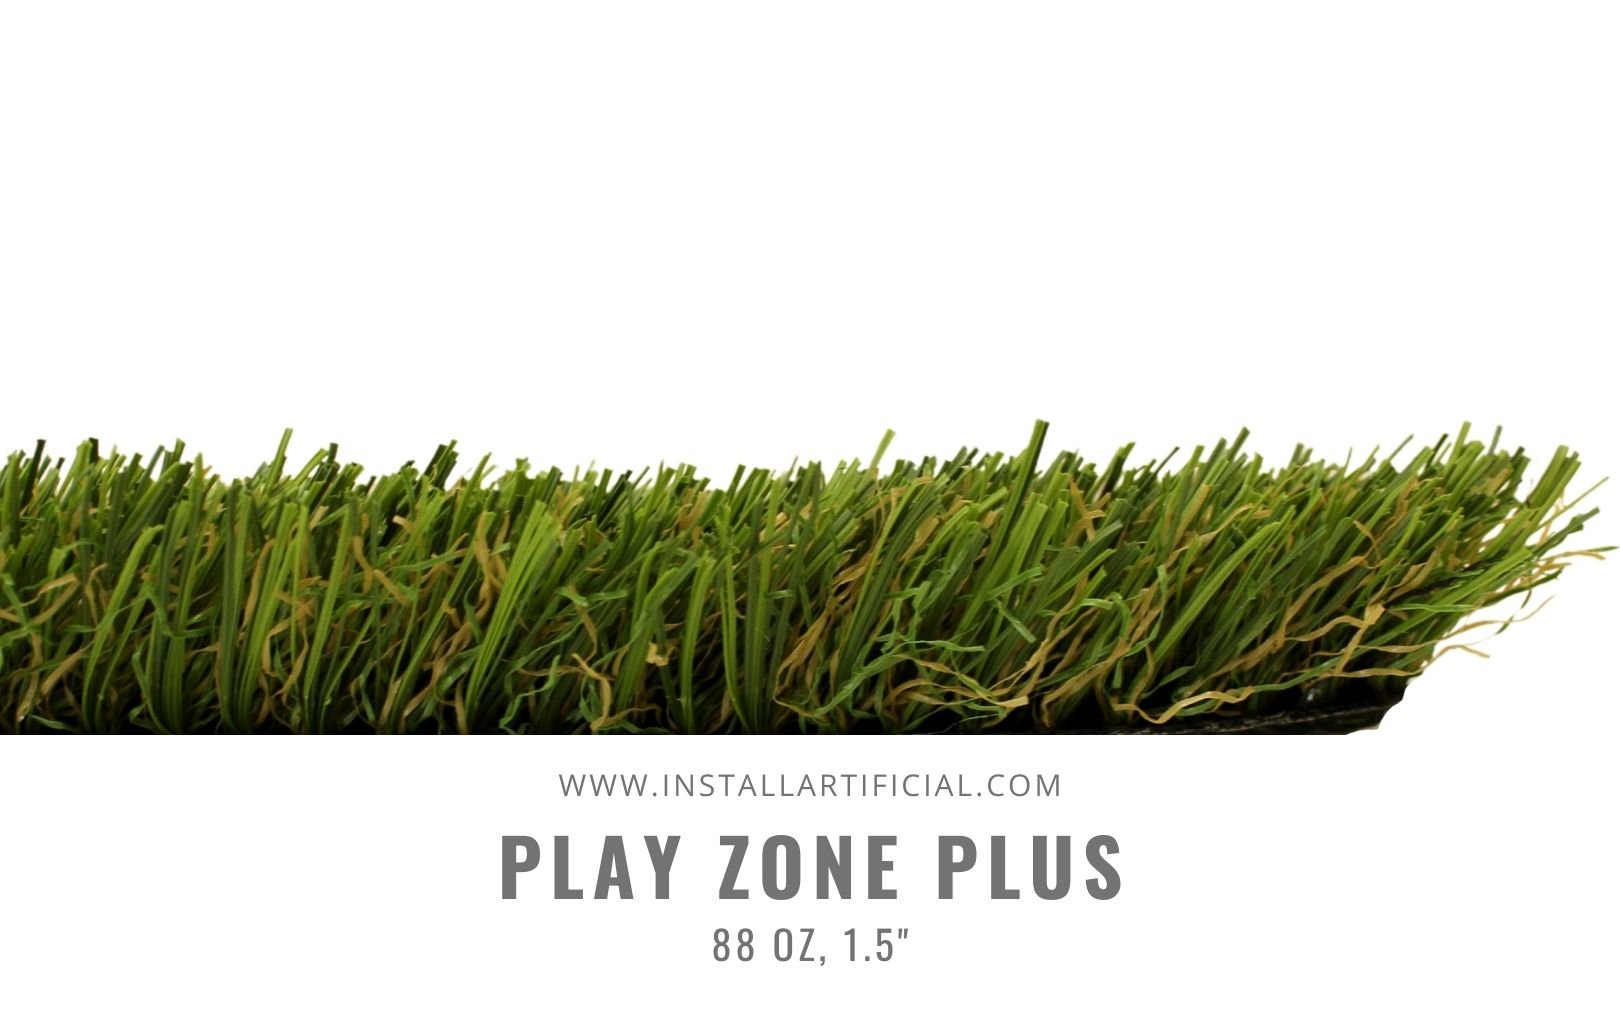 Playzone Plus, Smart Turf, side